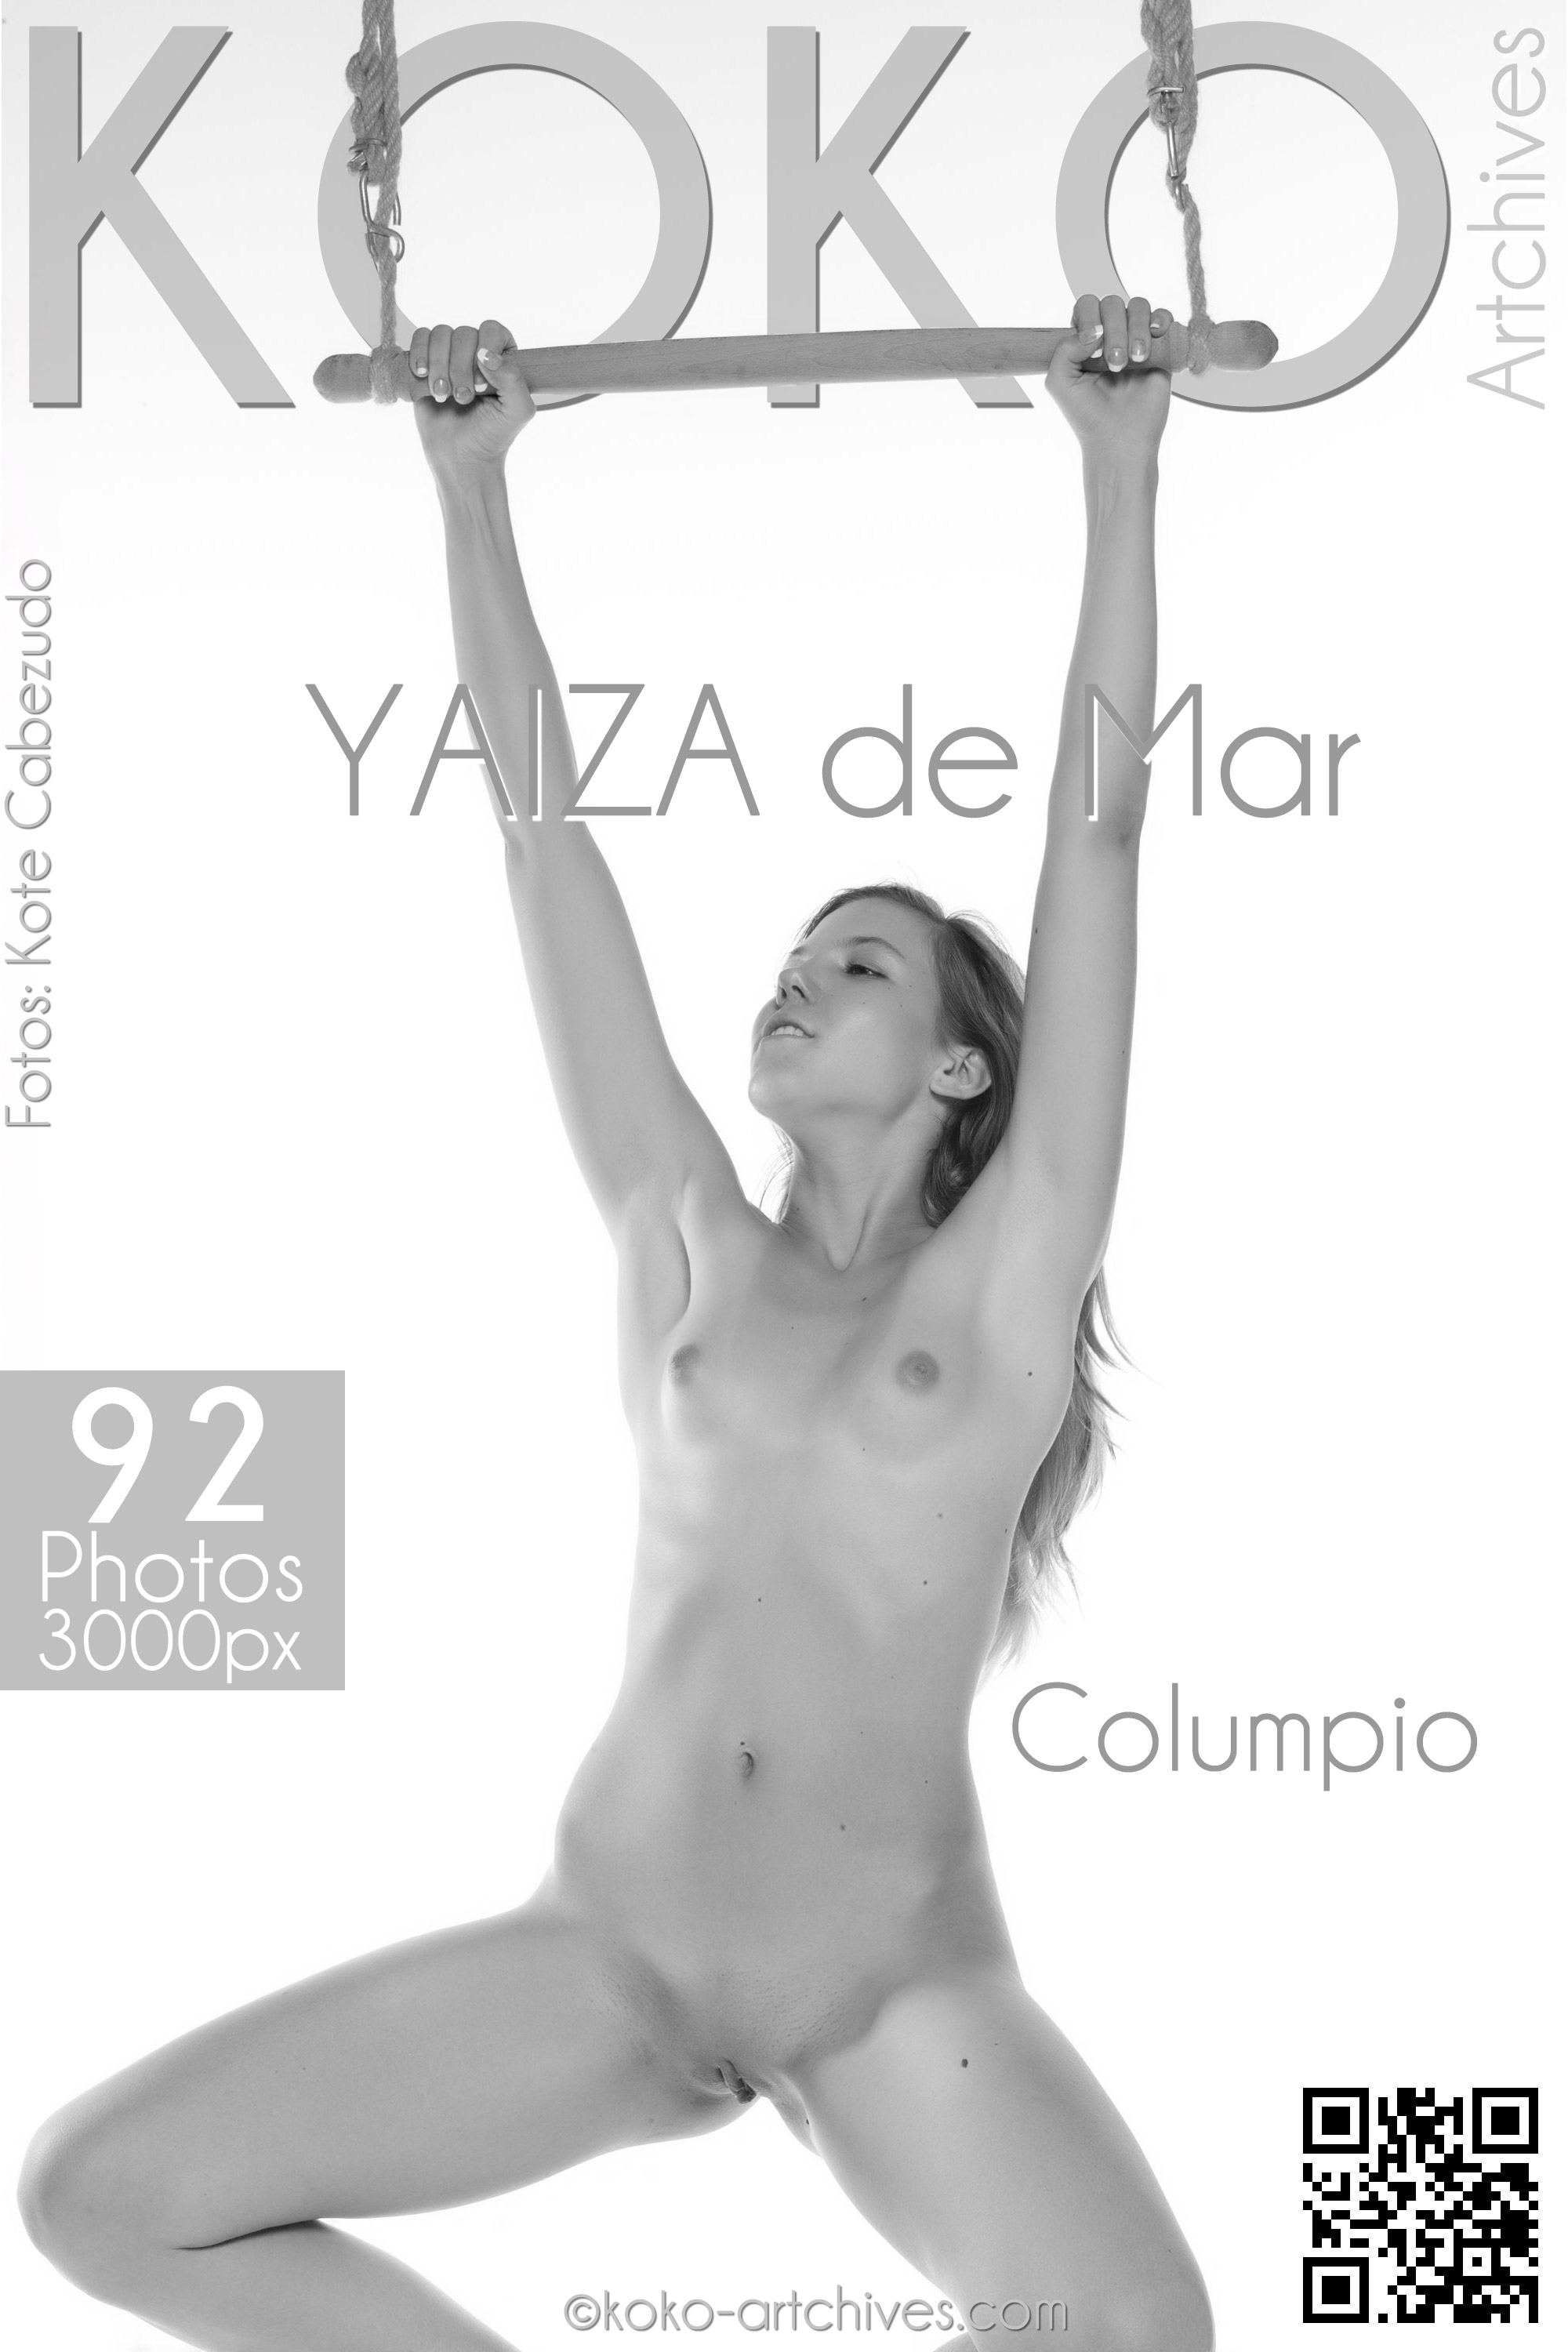 20130223 Yaiza del Mar Columpio